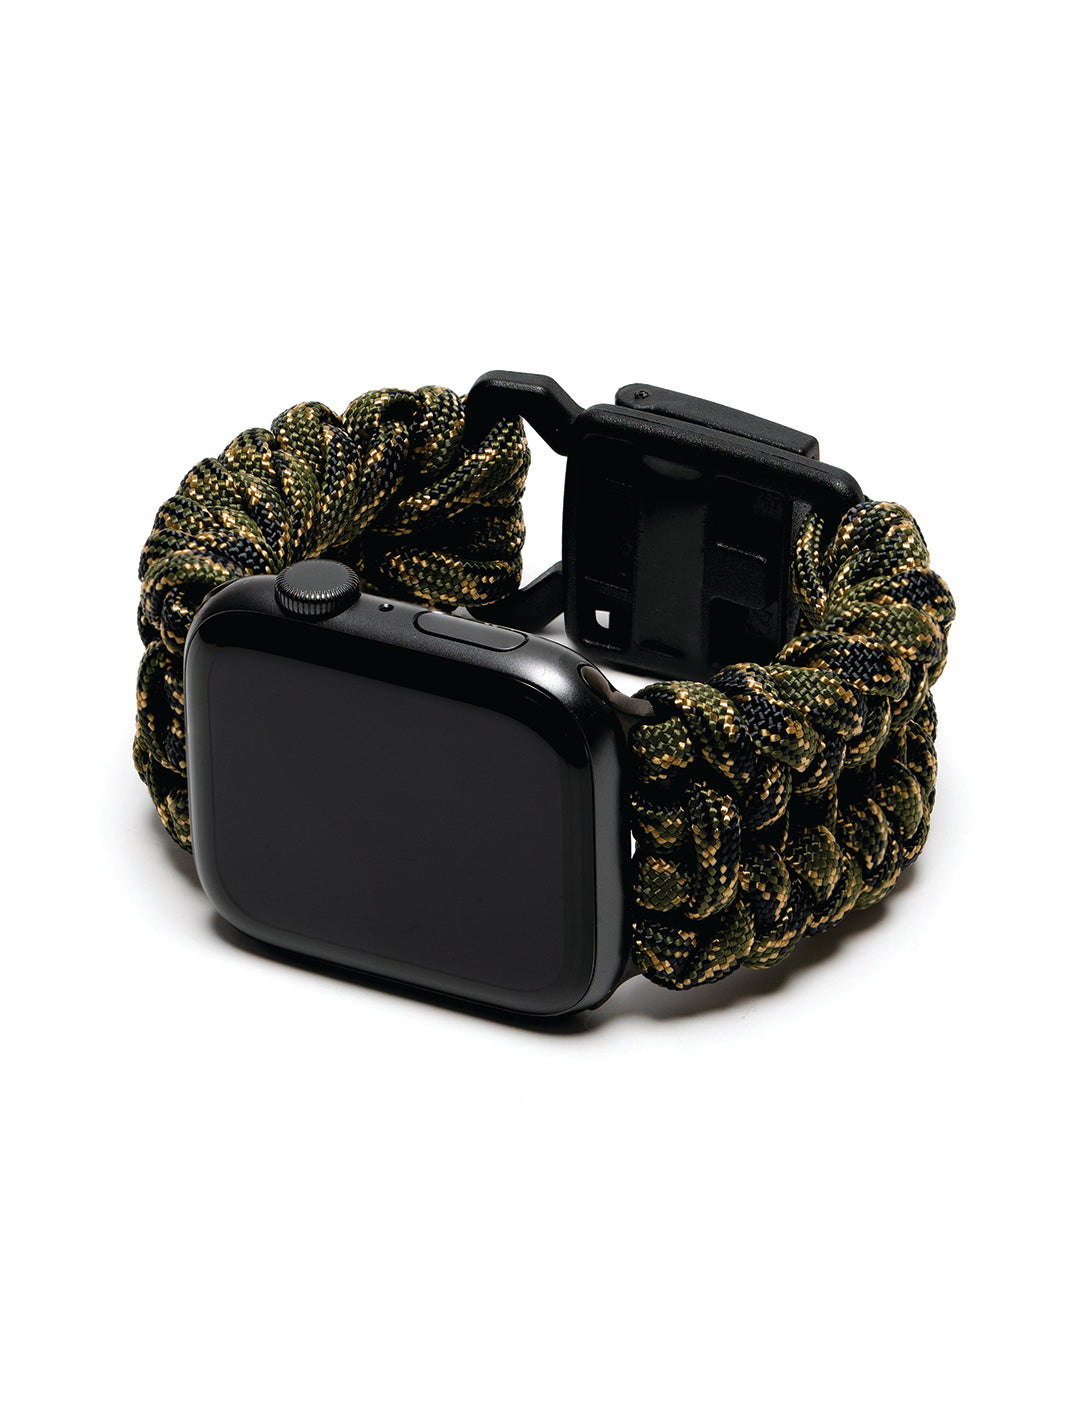 Apple Watch - Veteran Camo